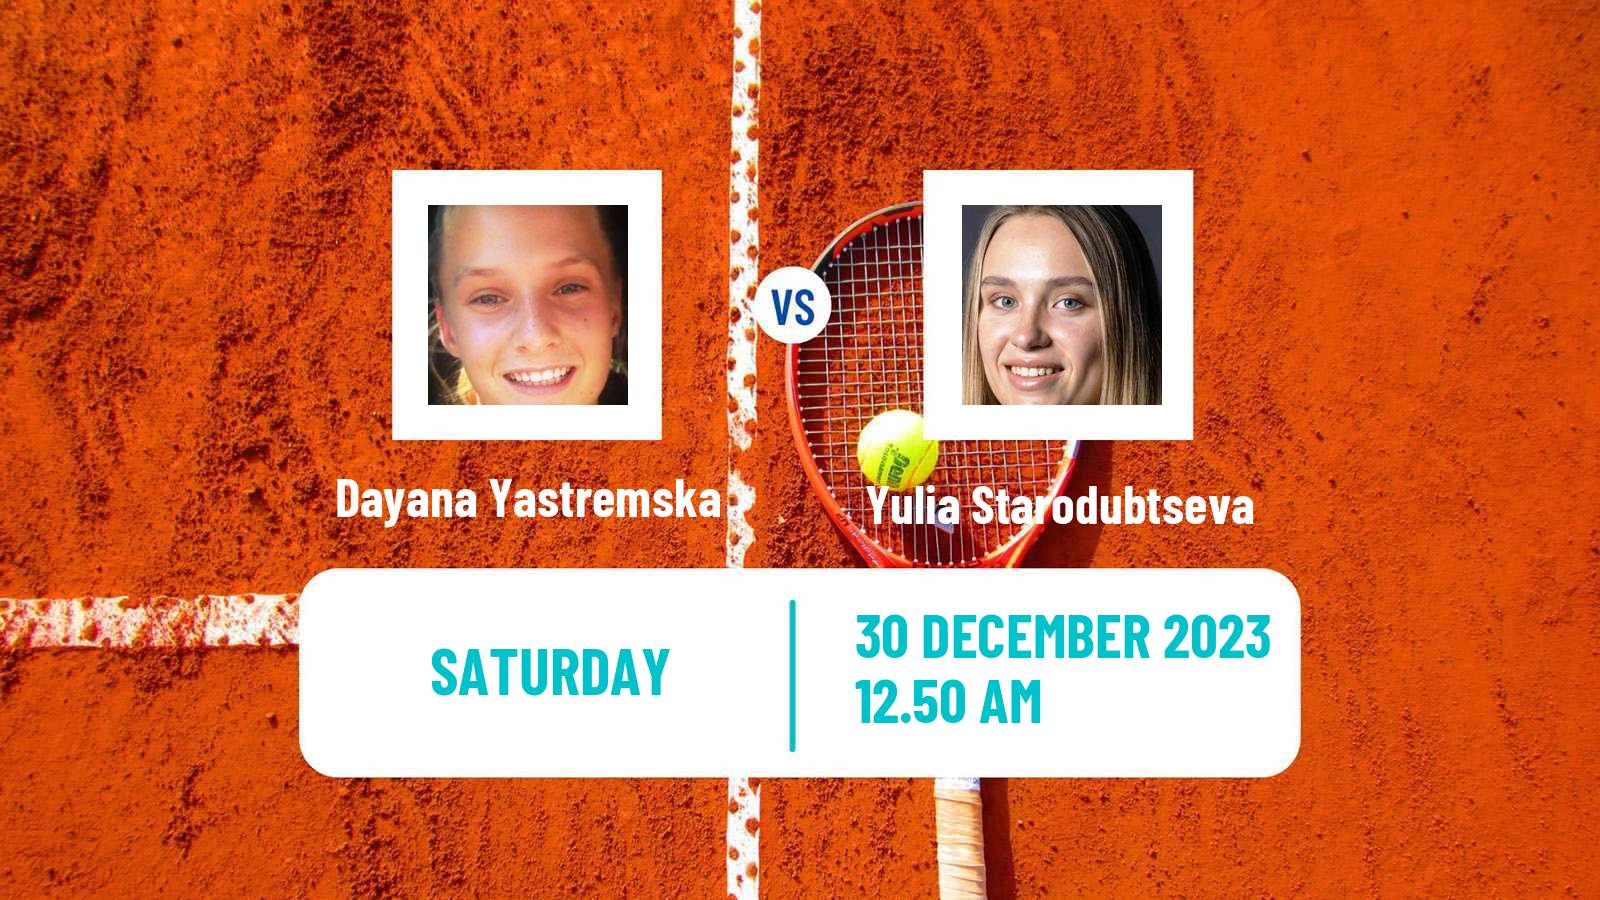 Tennis WTA Brisbane Dayana Yastremska - Yulia Starodubtseva